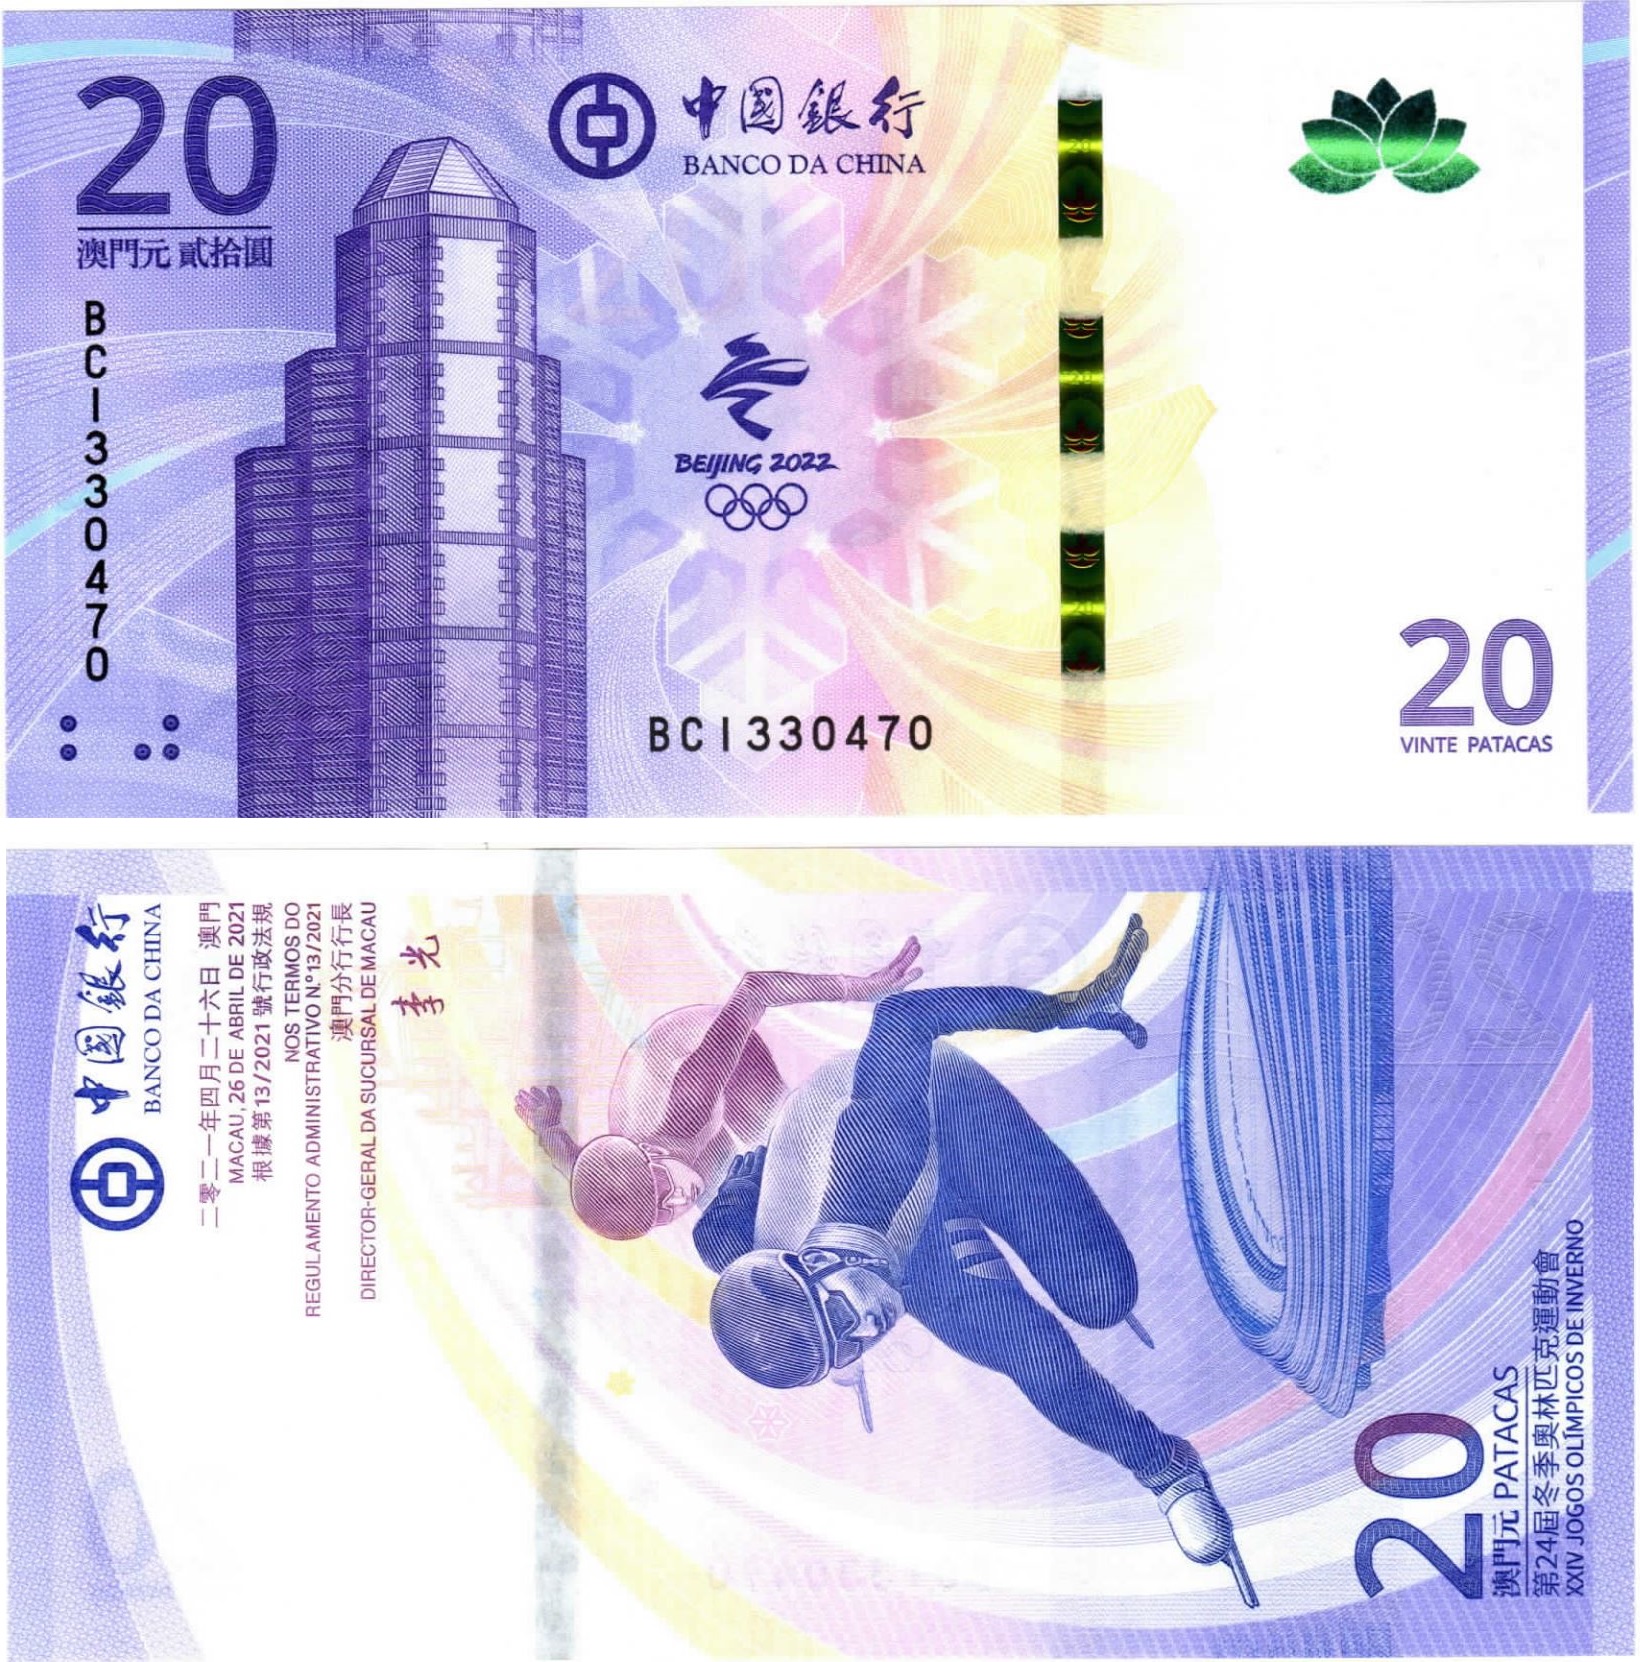 N0167, Macau Bank of China 2022 Winter Olympics Commemorative Paper Money, 20 Patacas